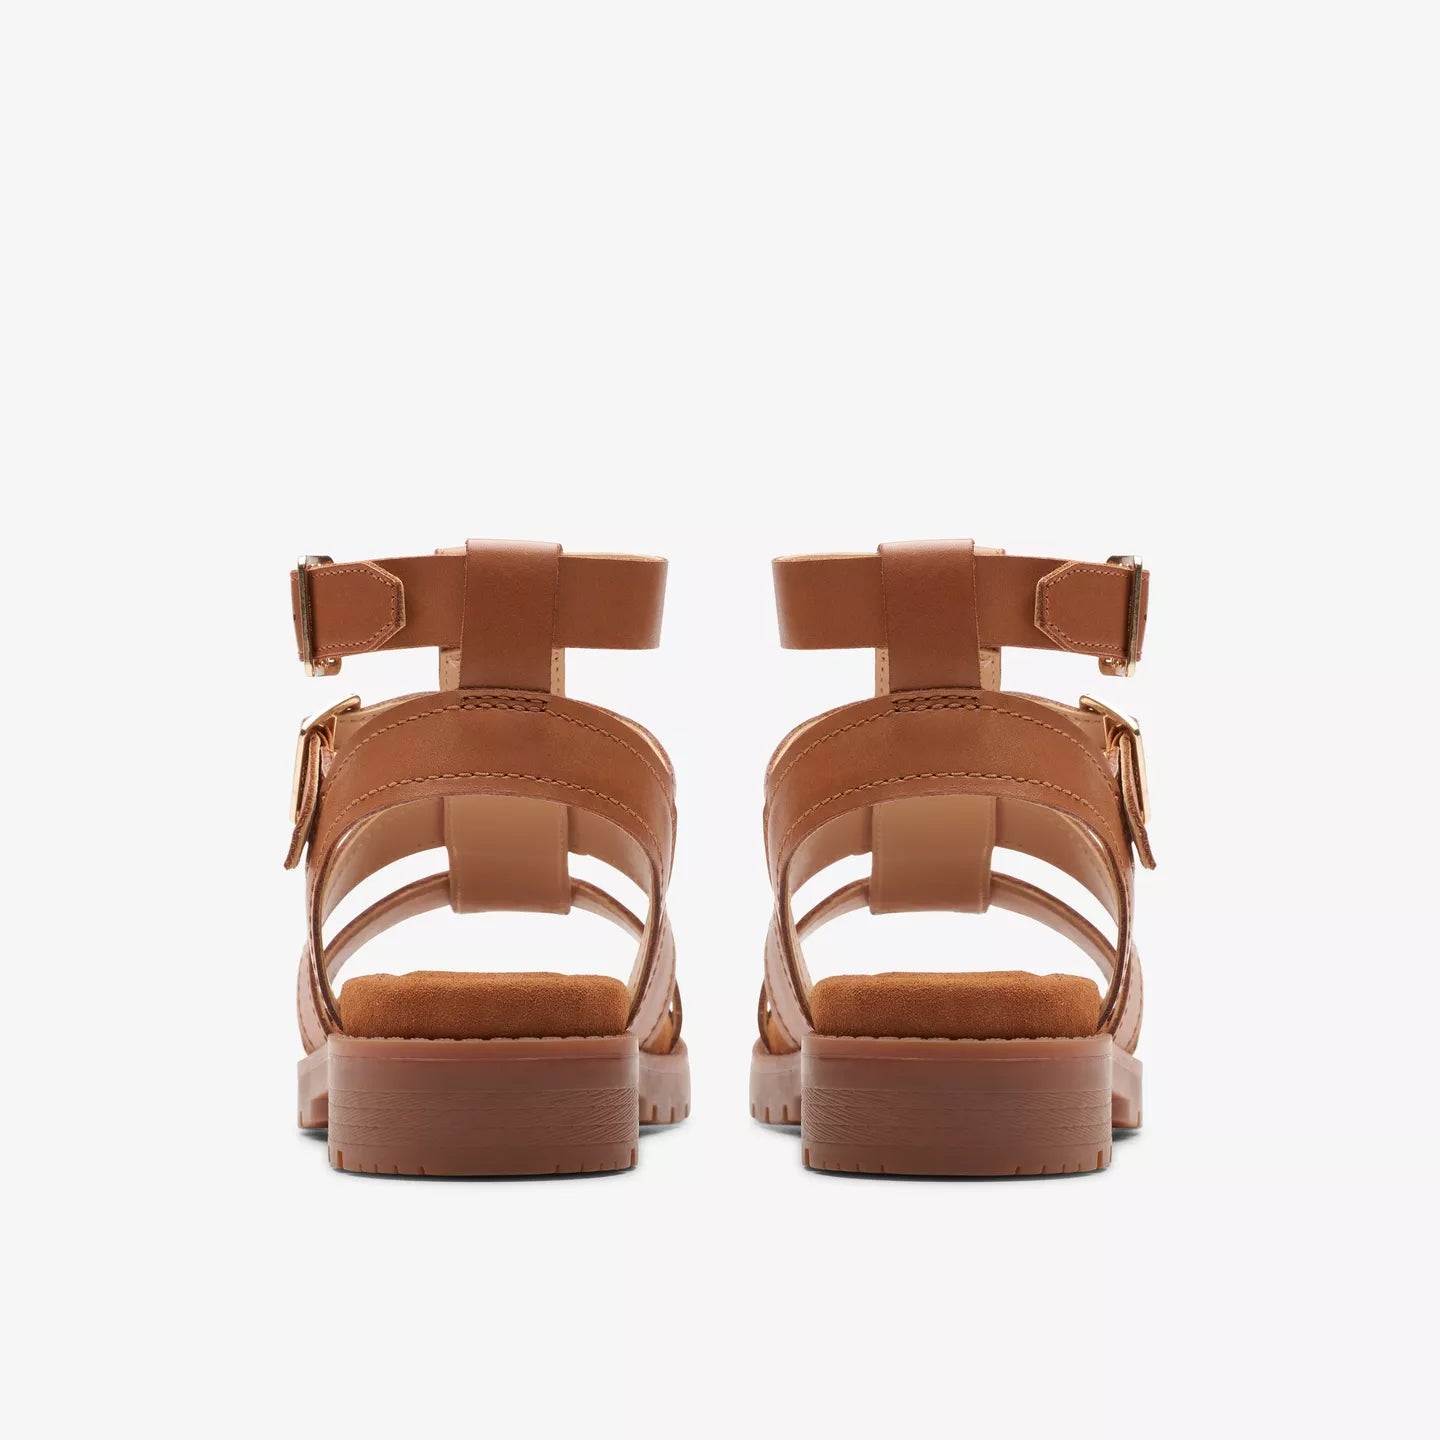 Clarks Orinoco Cove Tan Leather Sandals